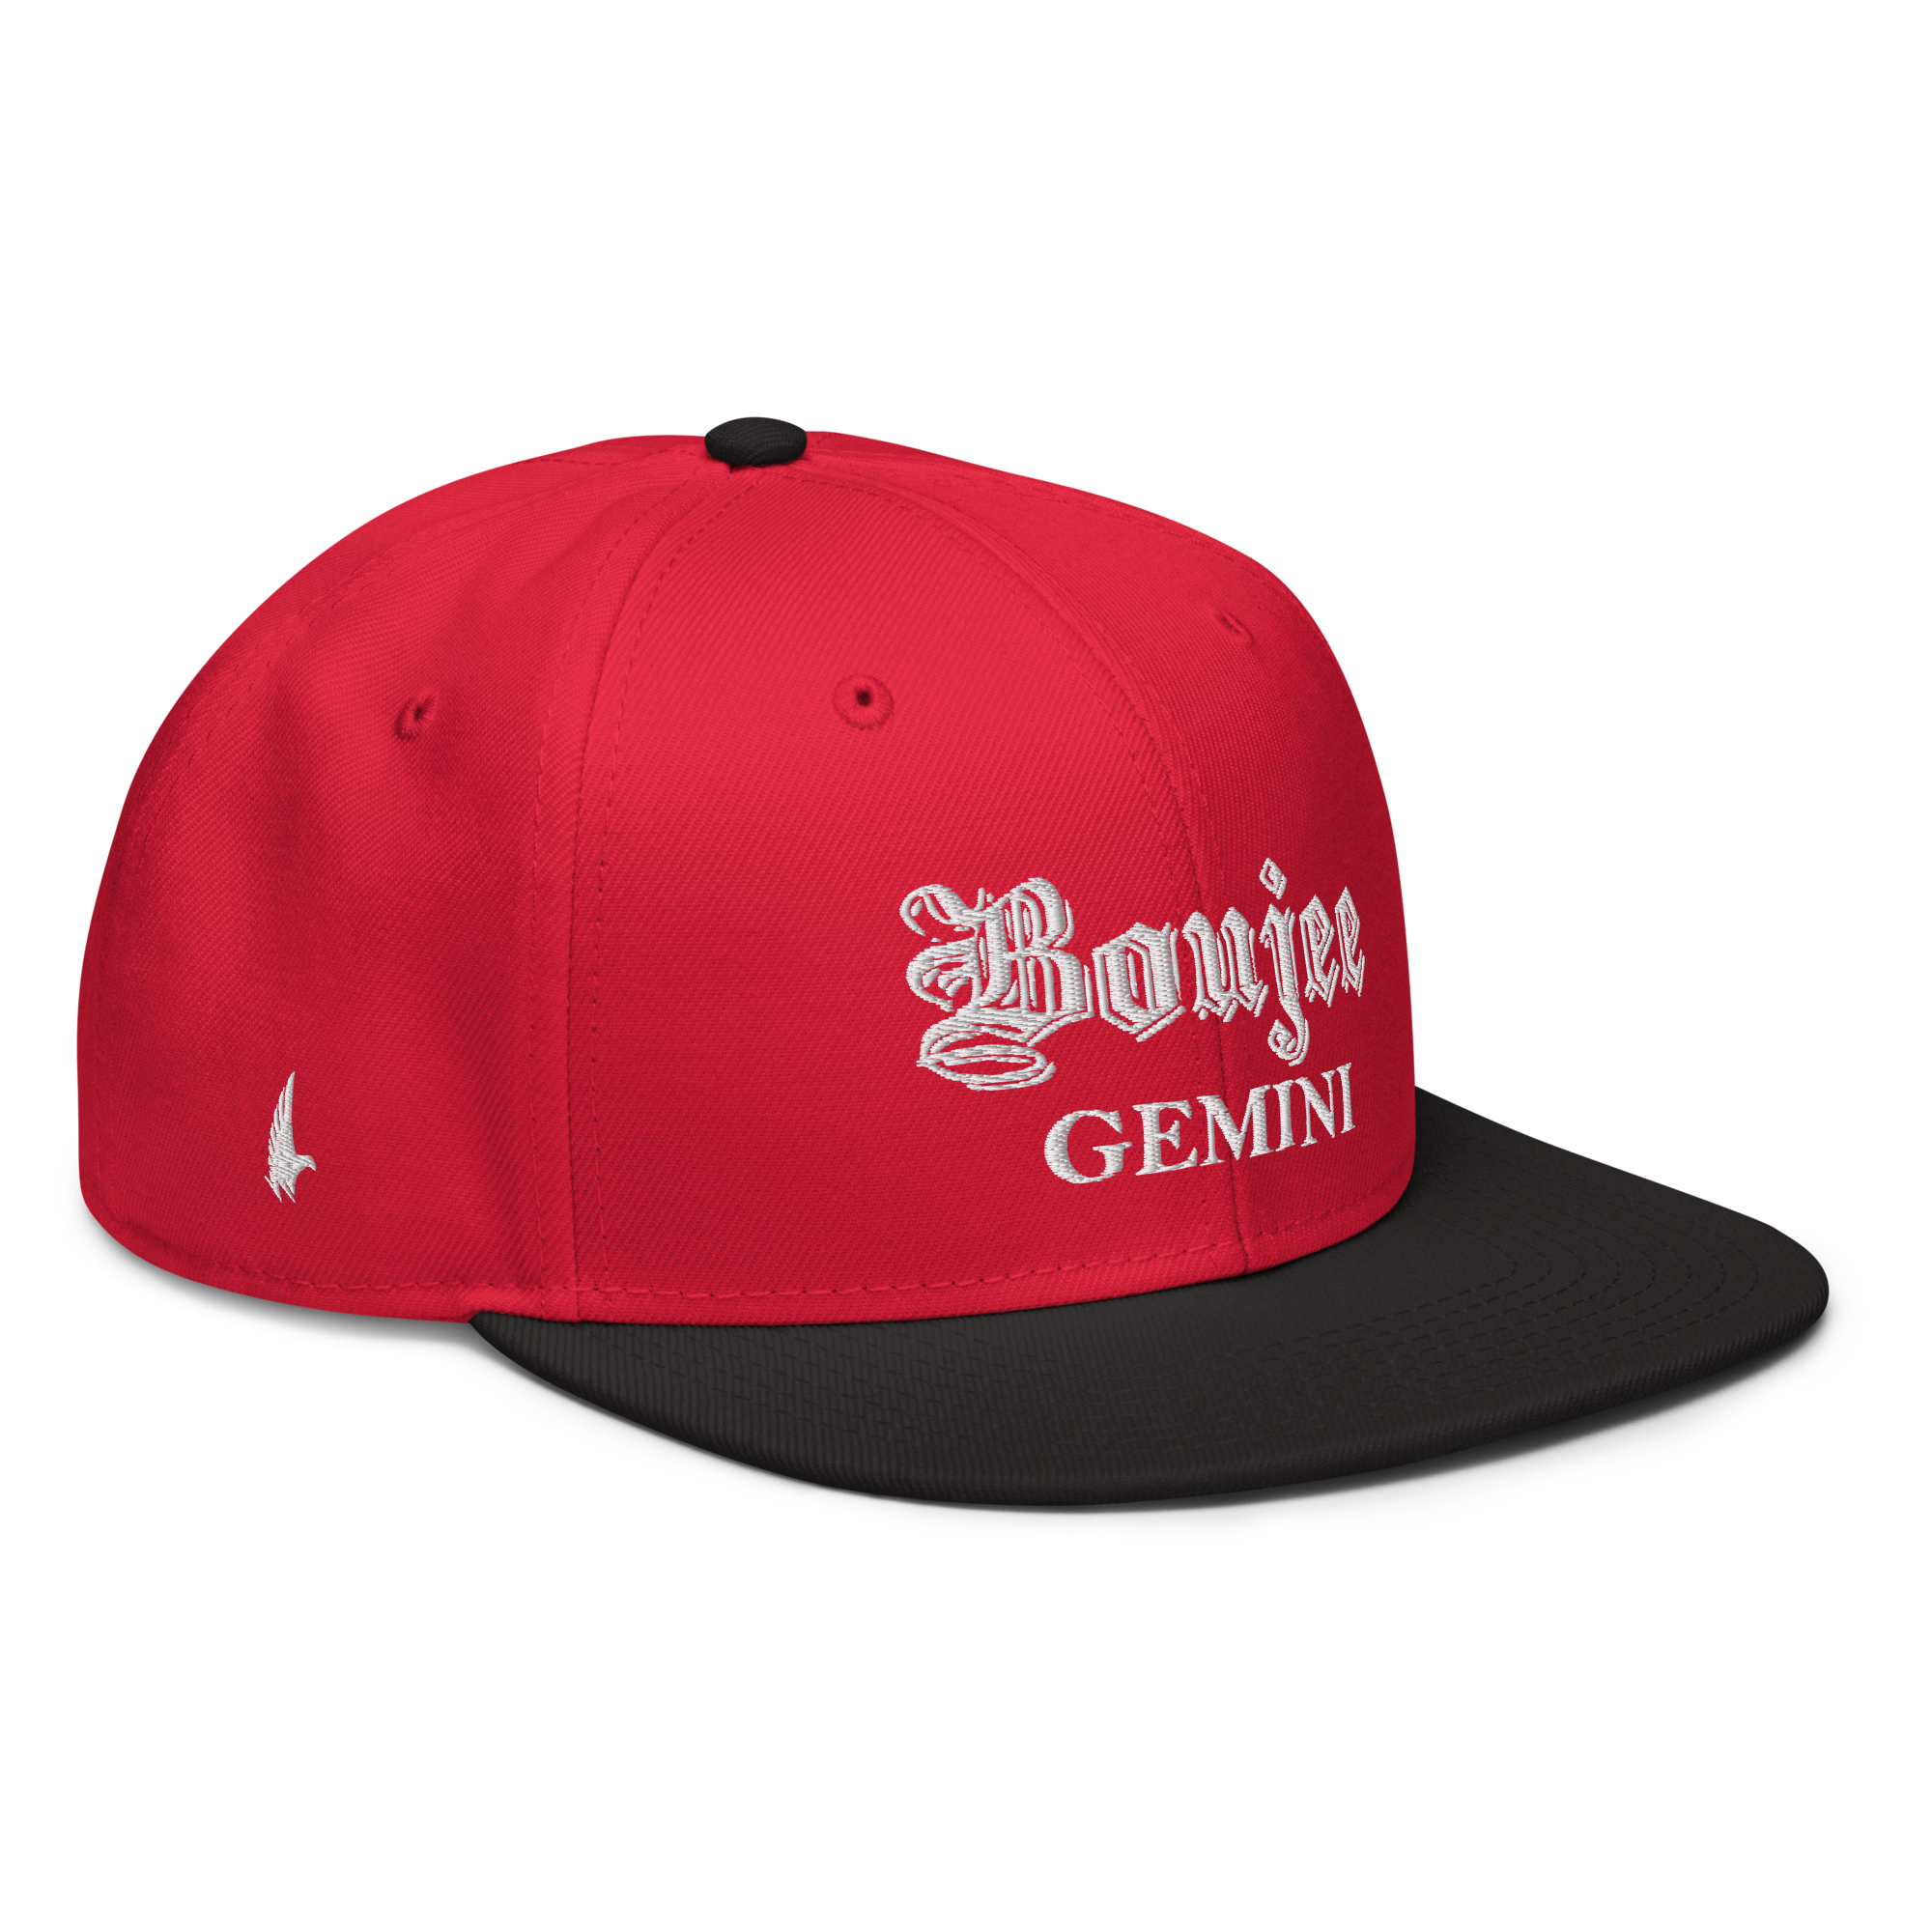 Boujee Gemini Snapback Hat - Red/White/Black - Loyalty Vibes